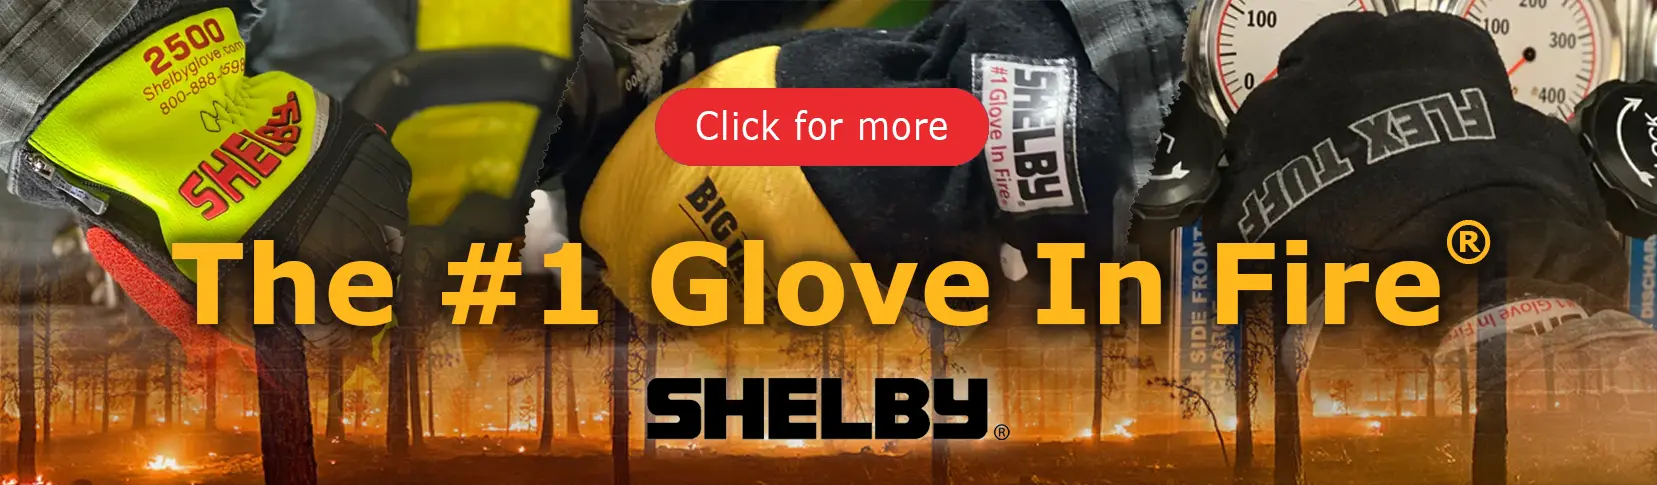 Shelby Glove